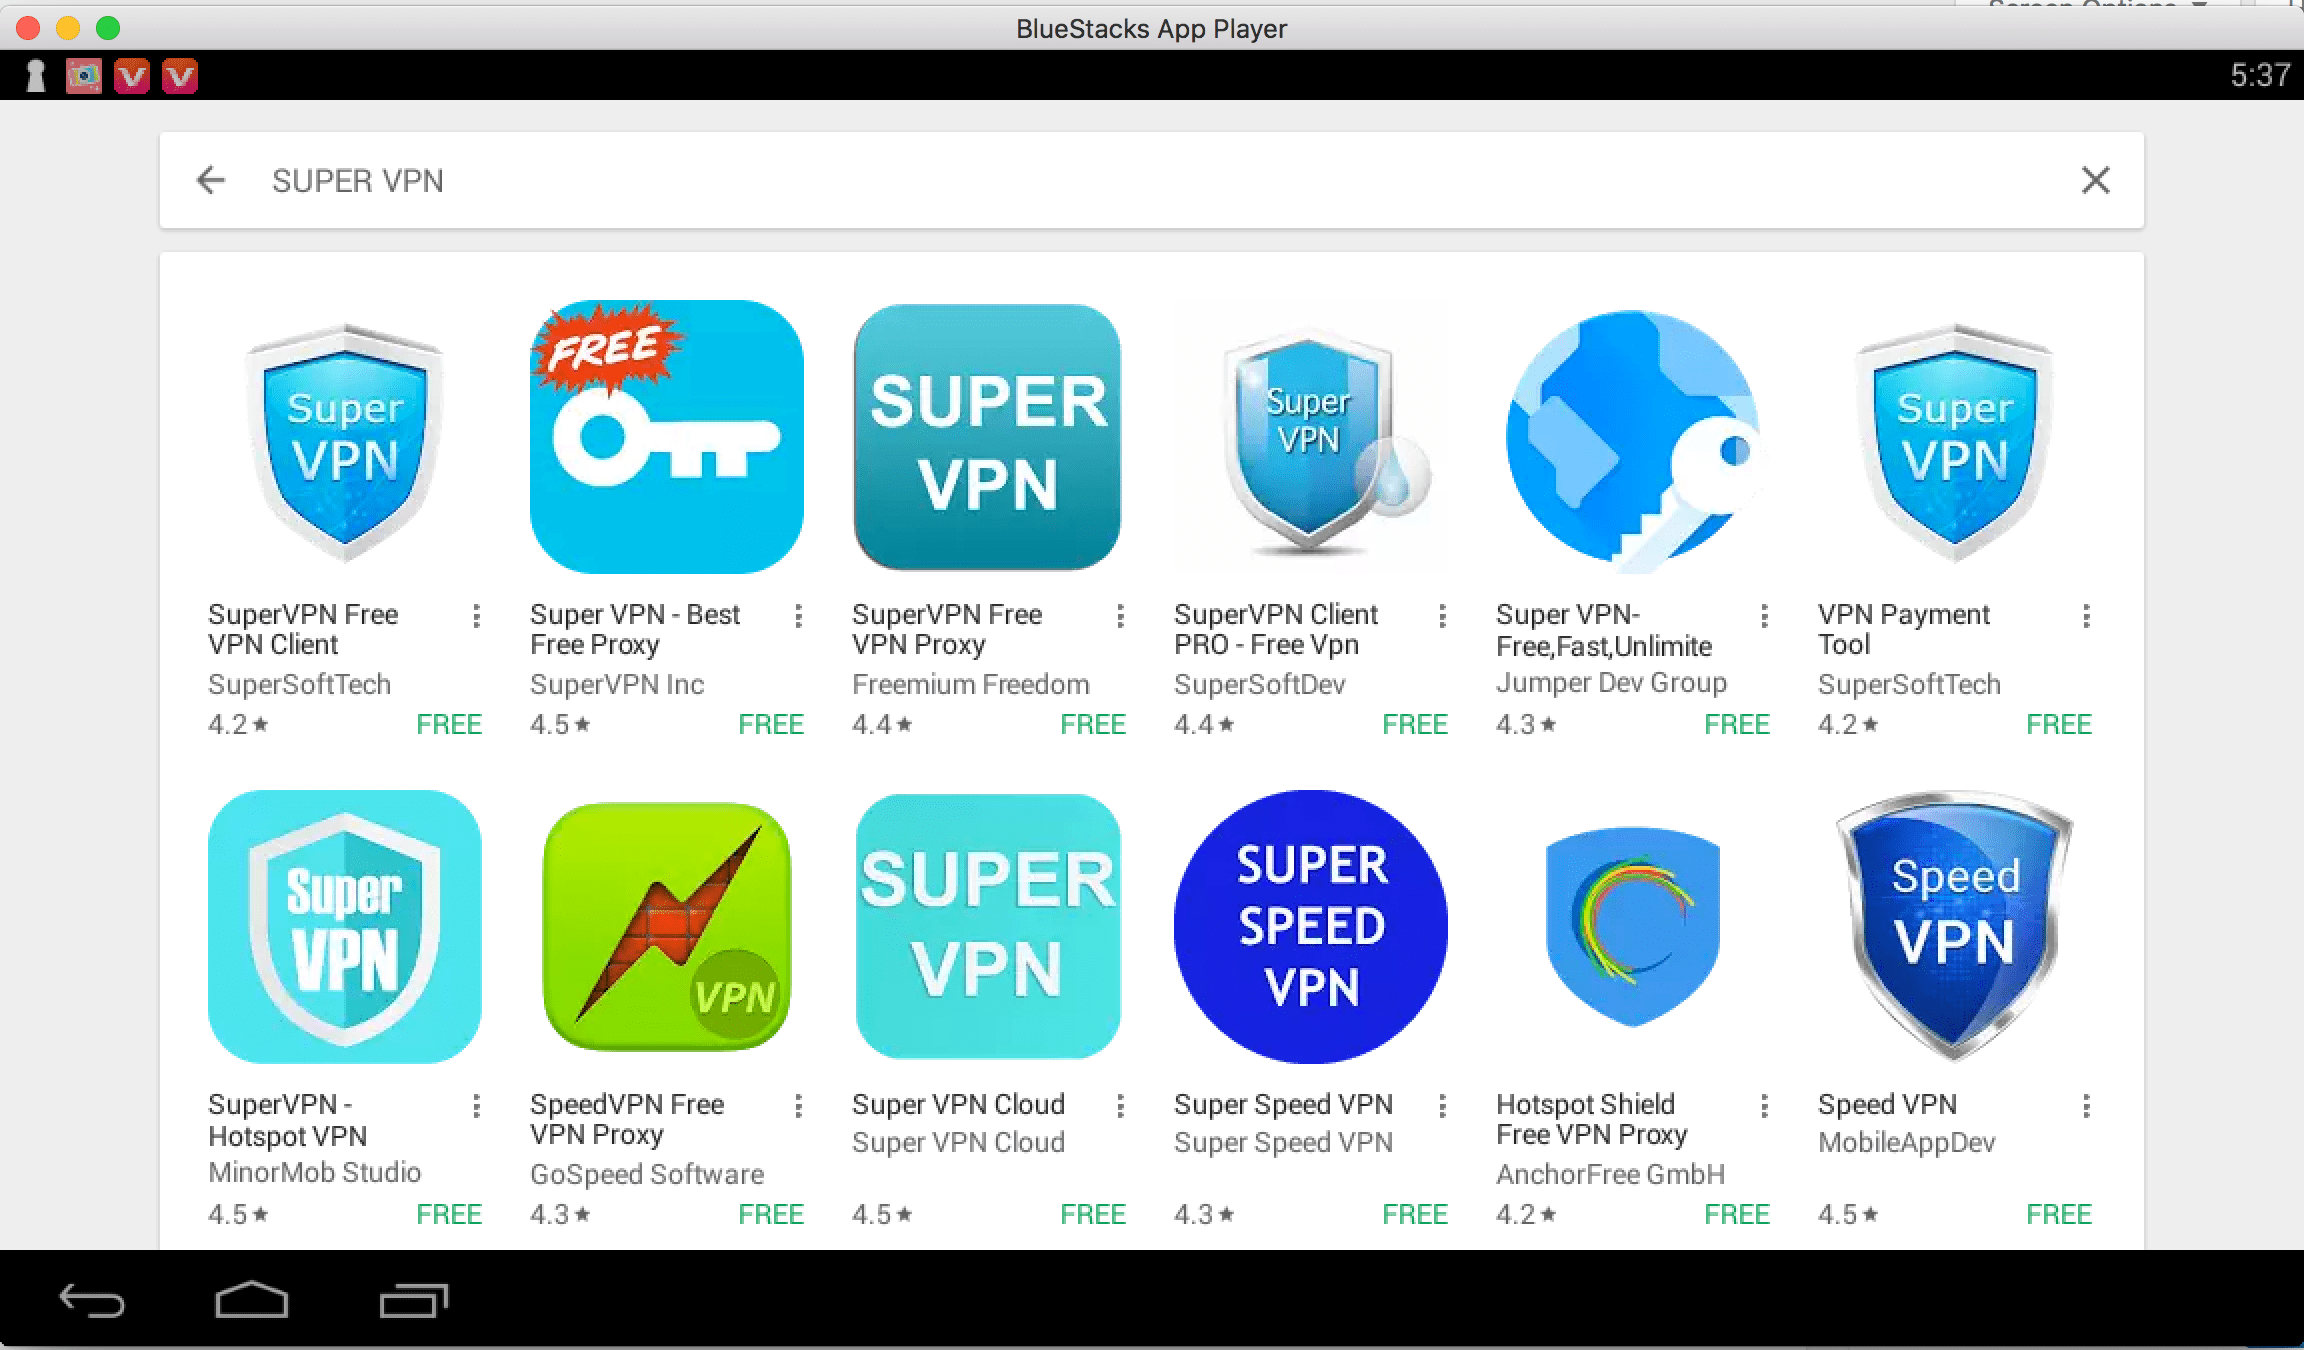 free vpn for mac